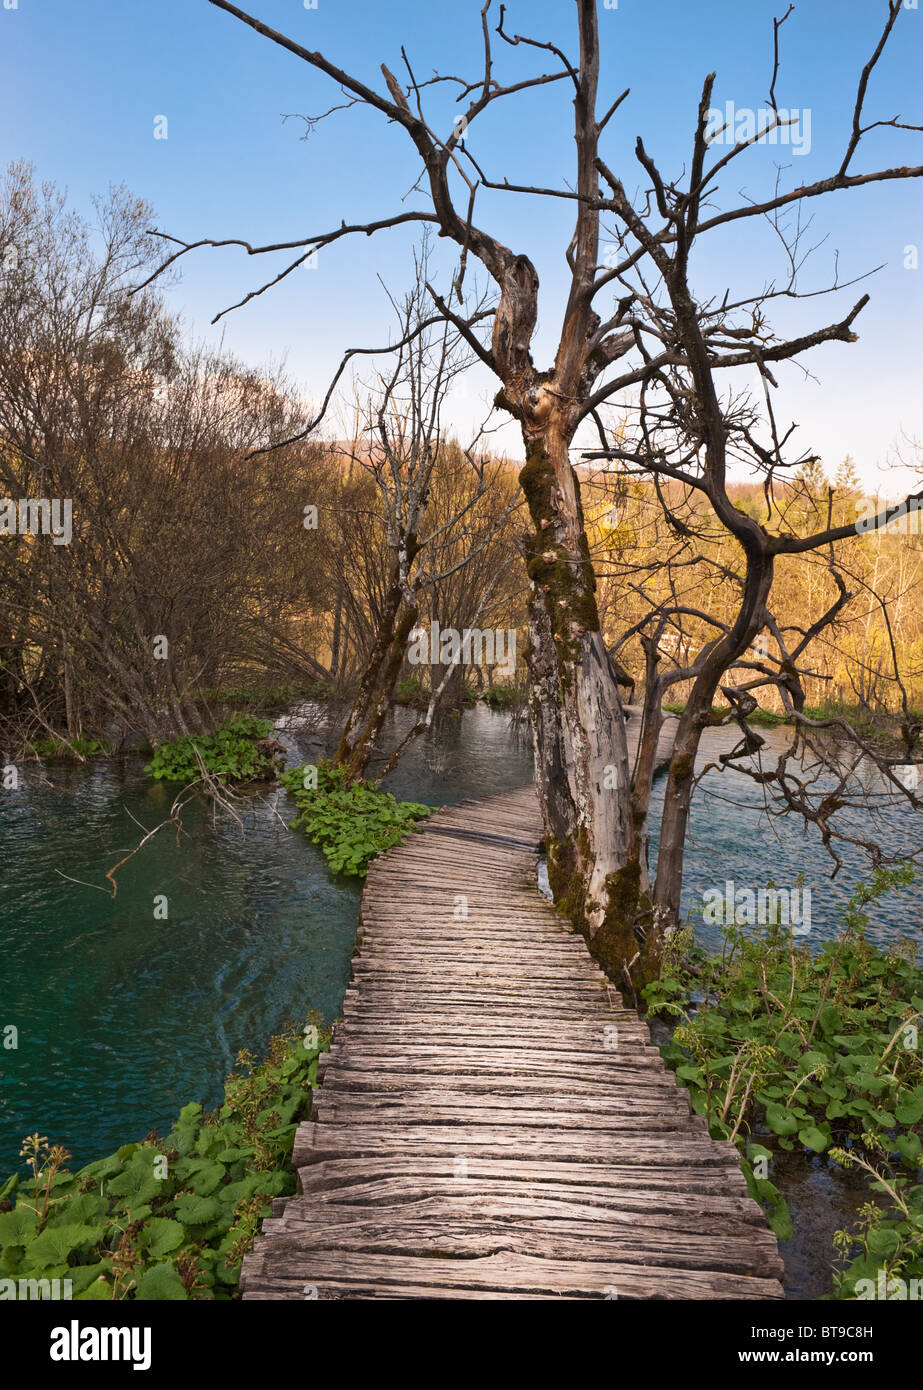 Holzsteg über türkisblaue See im Nationalpark Plitvice, Kroatien. Frühlingszeit. Stockfoto